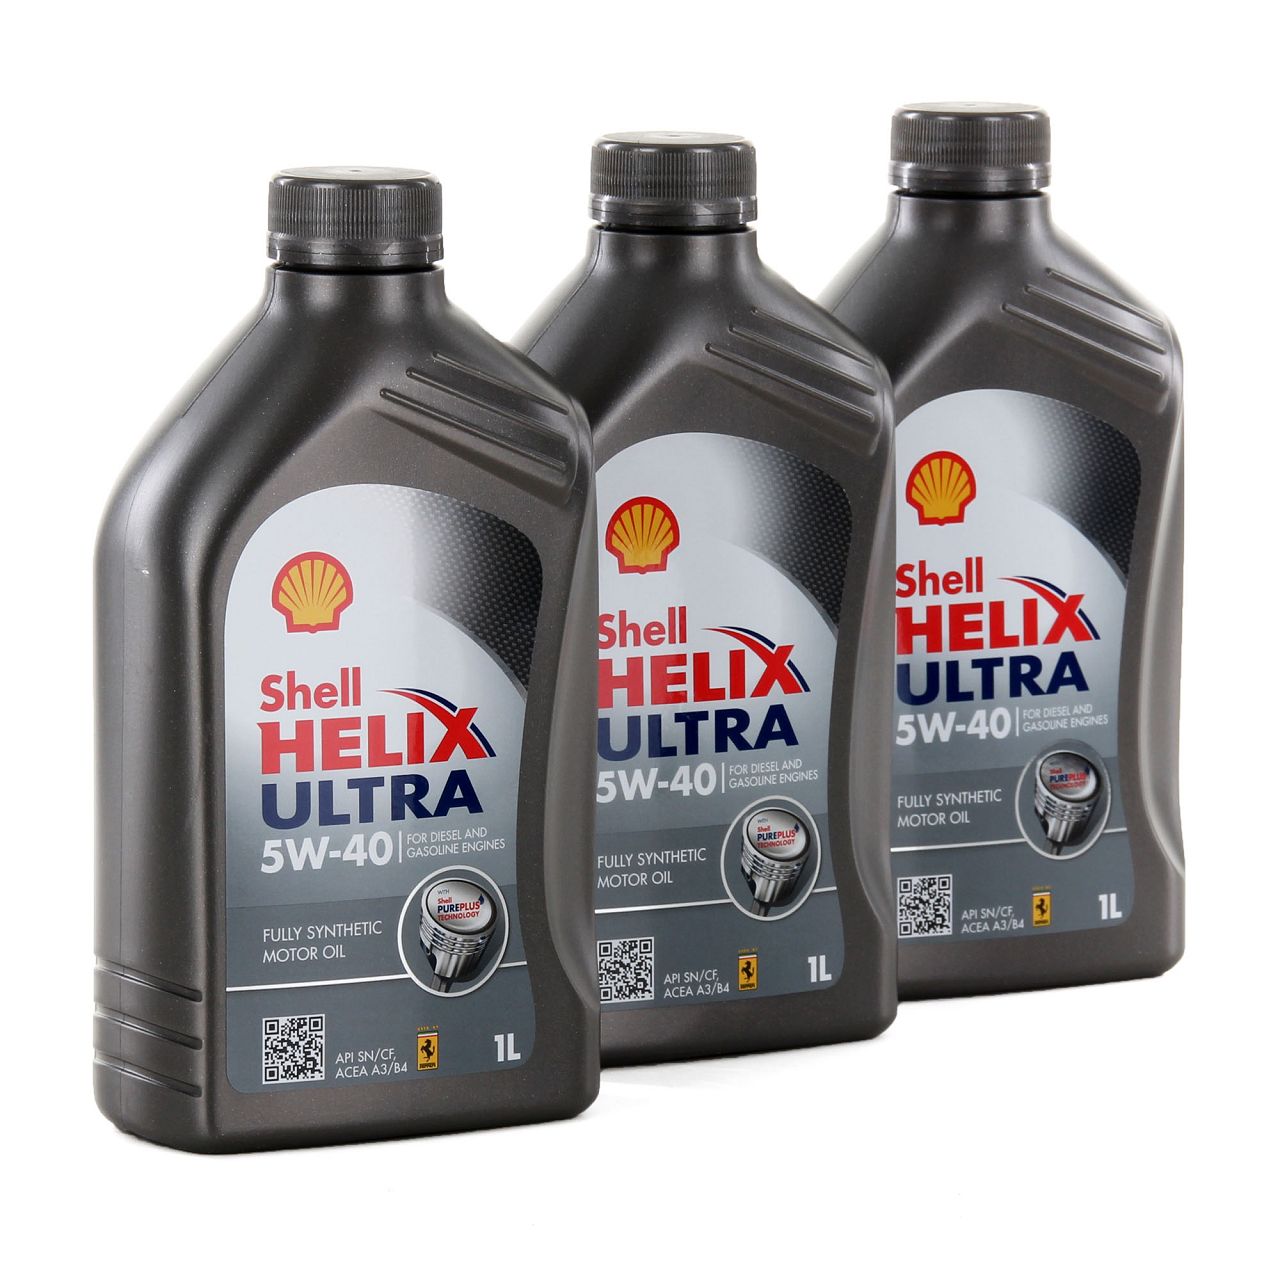 Shell helix 5w 40 купить. Shell Helix Ultra 5w40 502 505. Helix Ultra 5w40 для Хундай. Shell Helix Ultra 5w40. Shell Helix Ultra 5w40 допуск 502 505.